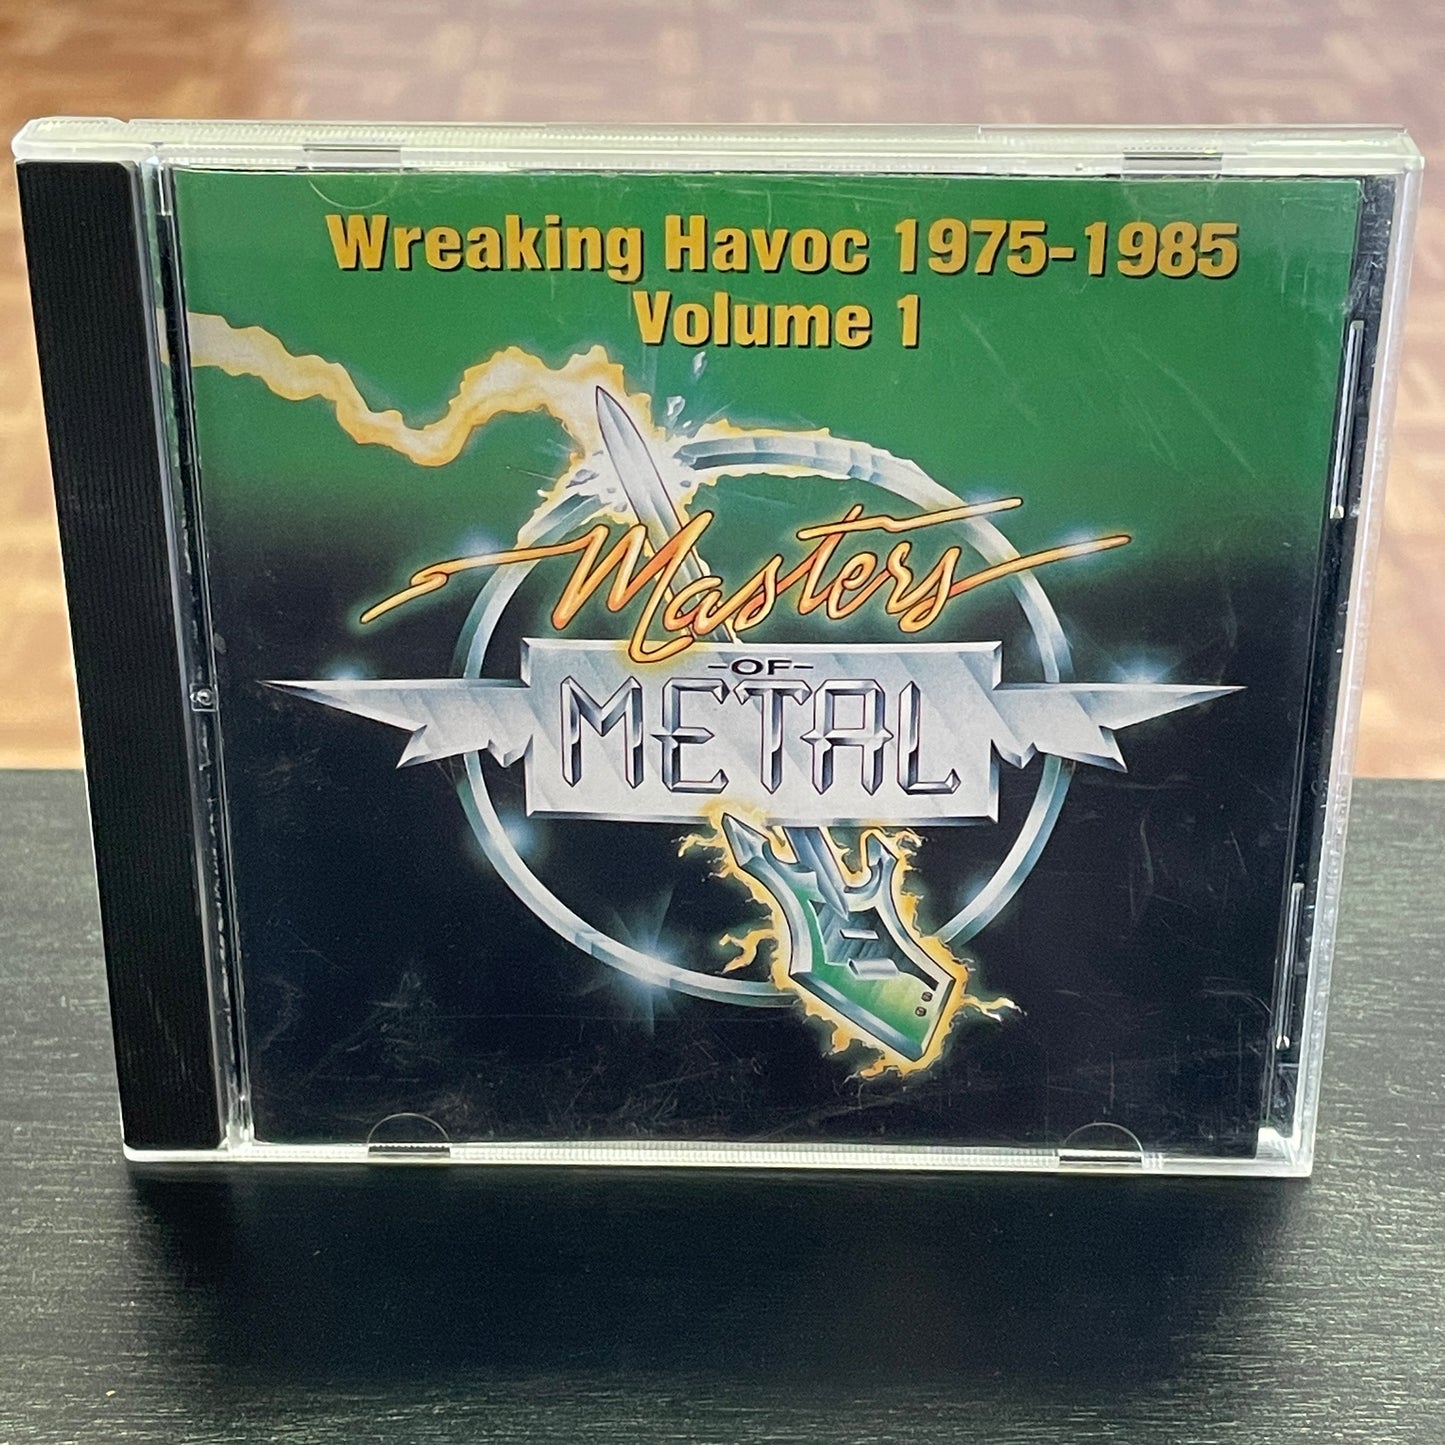 Masters of Metal - Wreaking Havoc 1975-1985 Volume 1 original CD